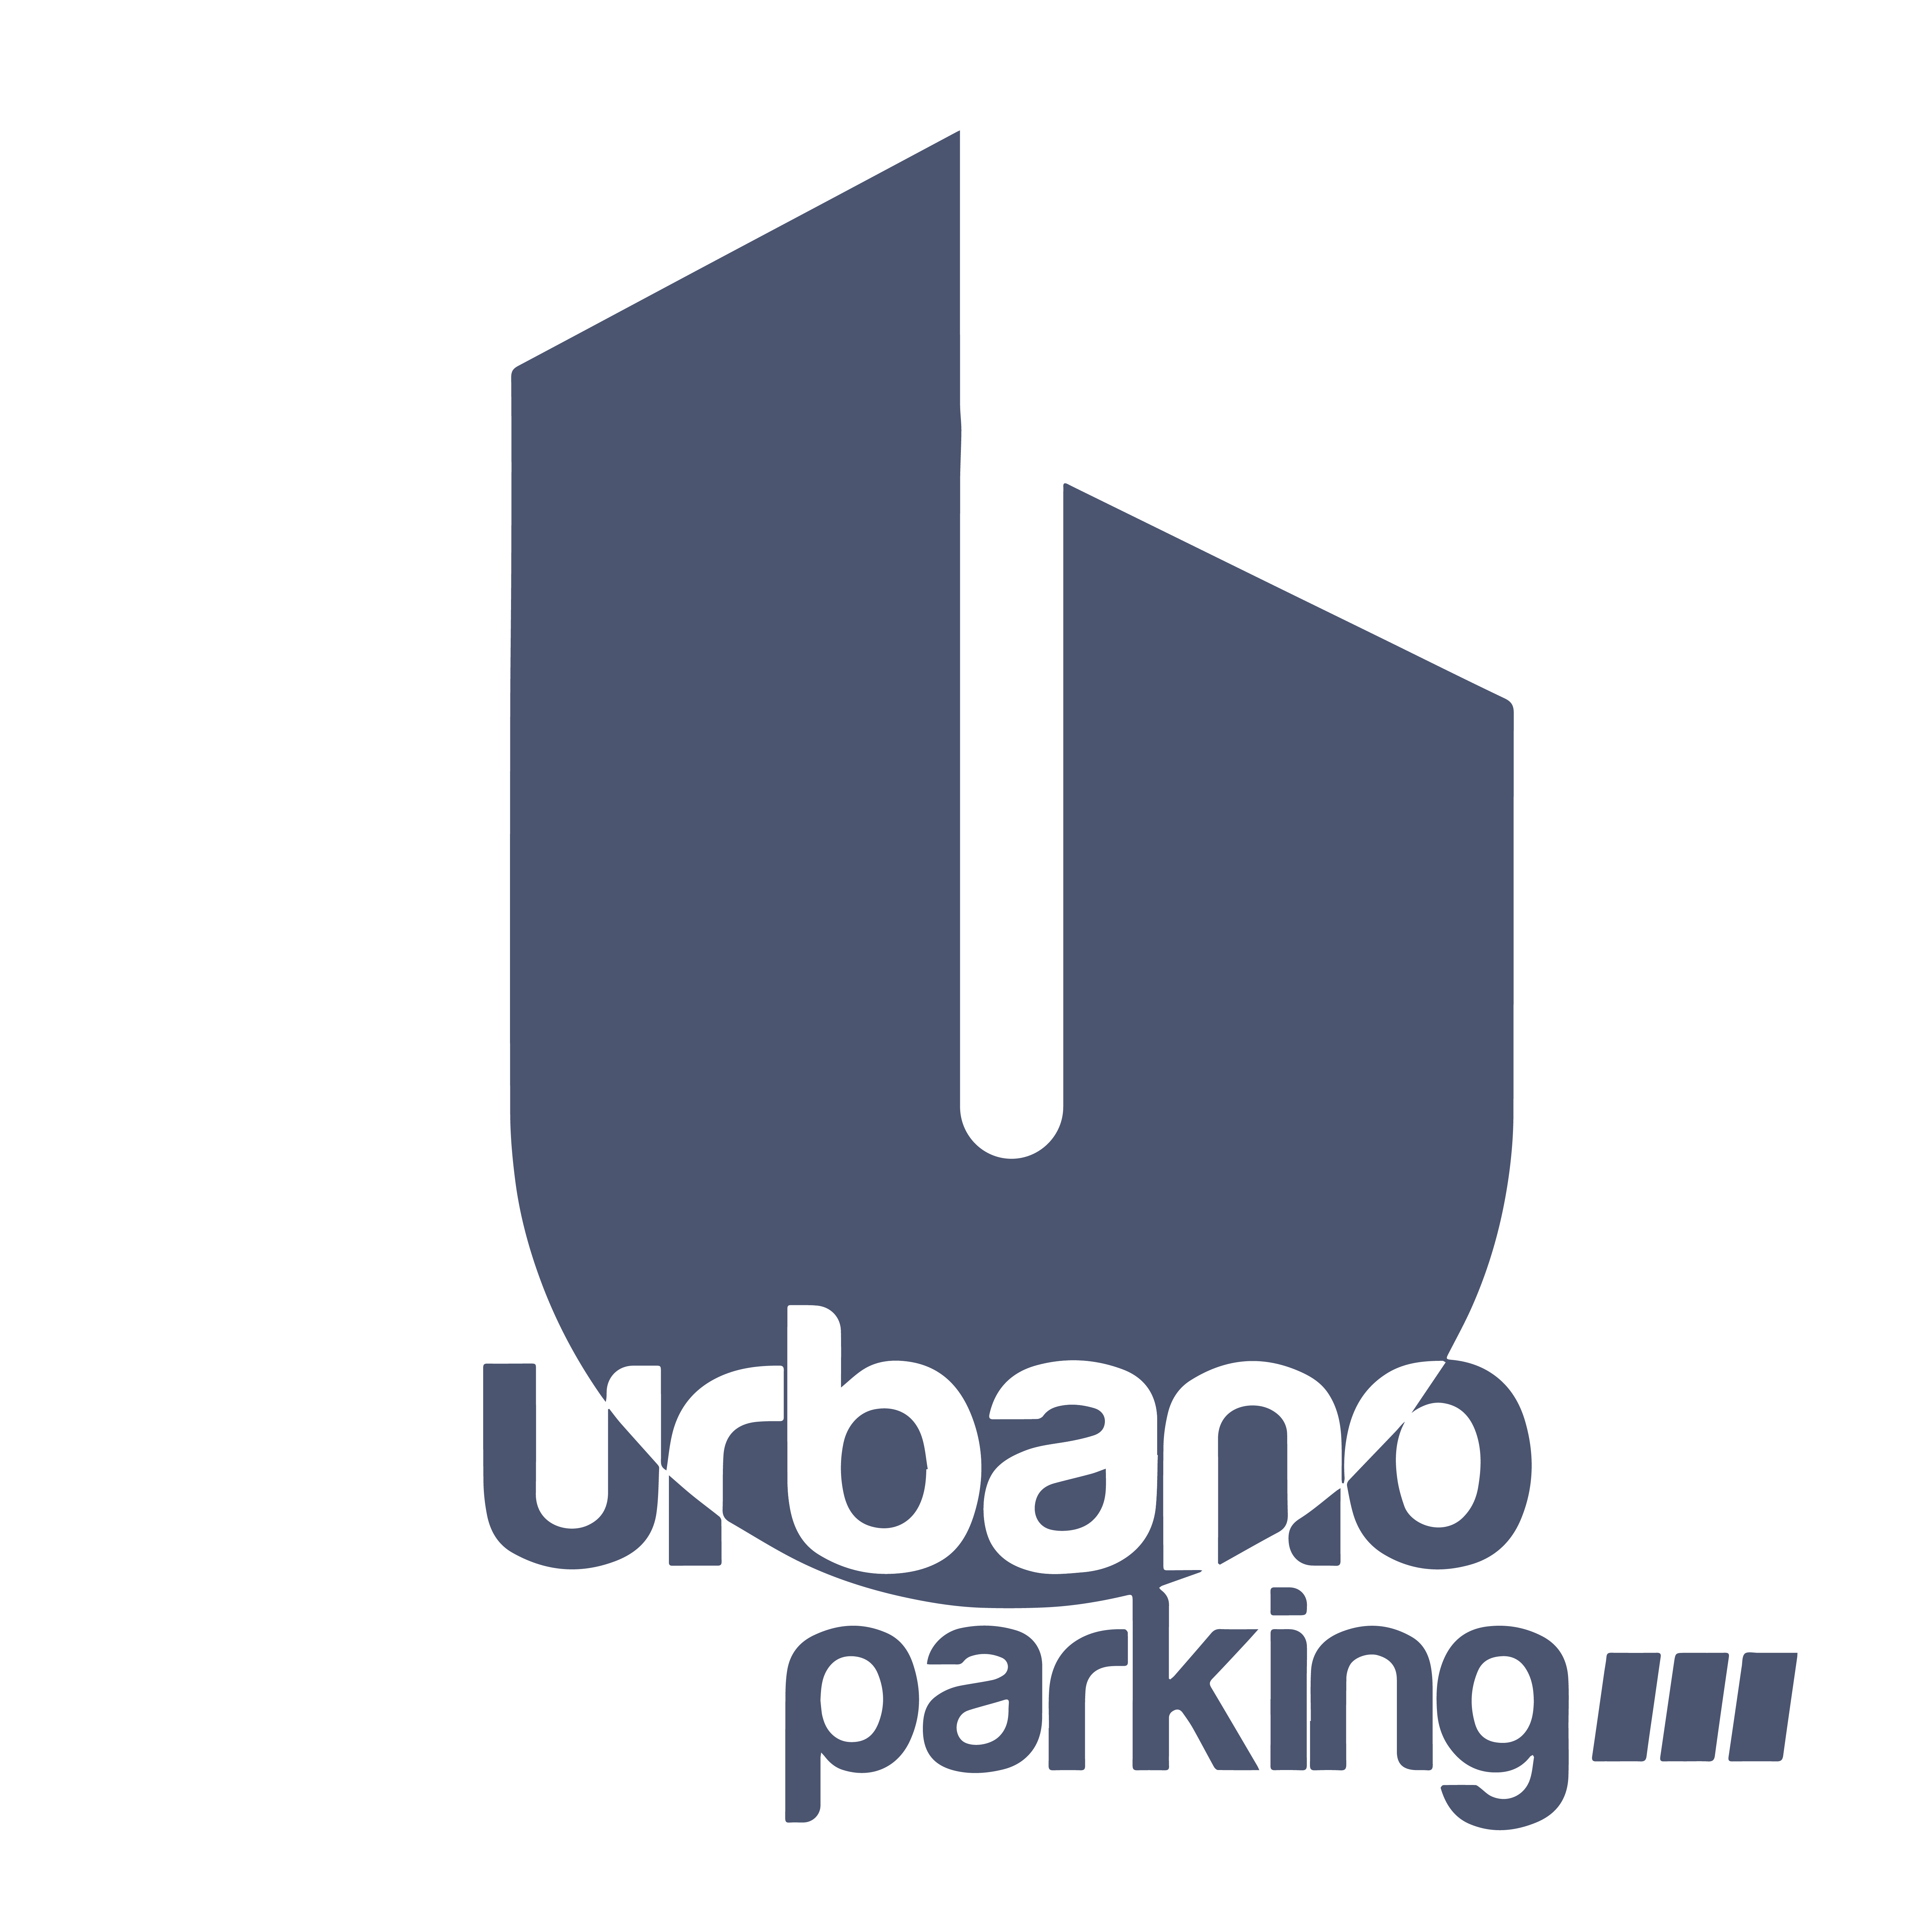 Cliente accesspark urbano parking